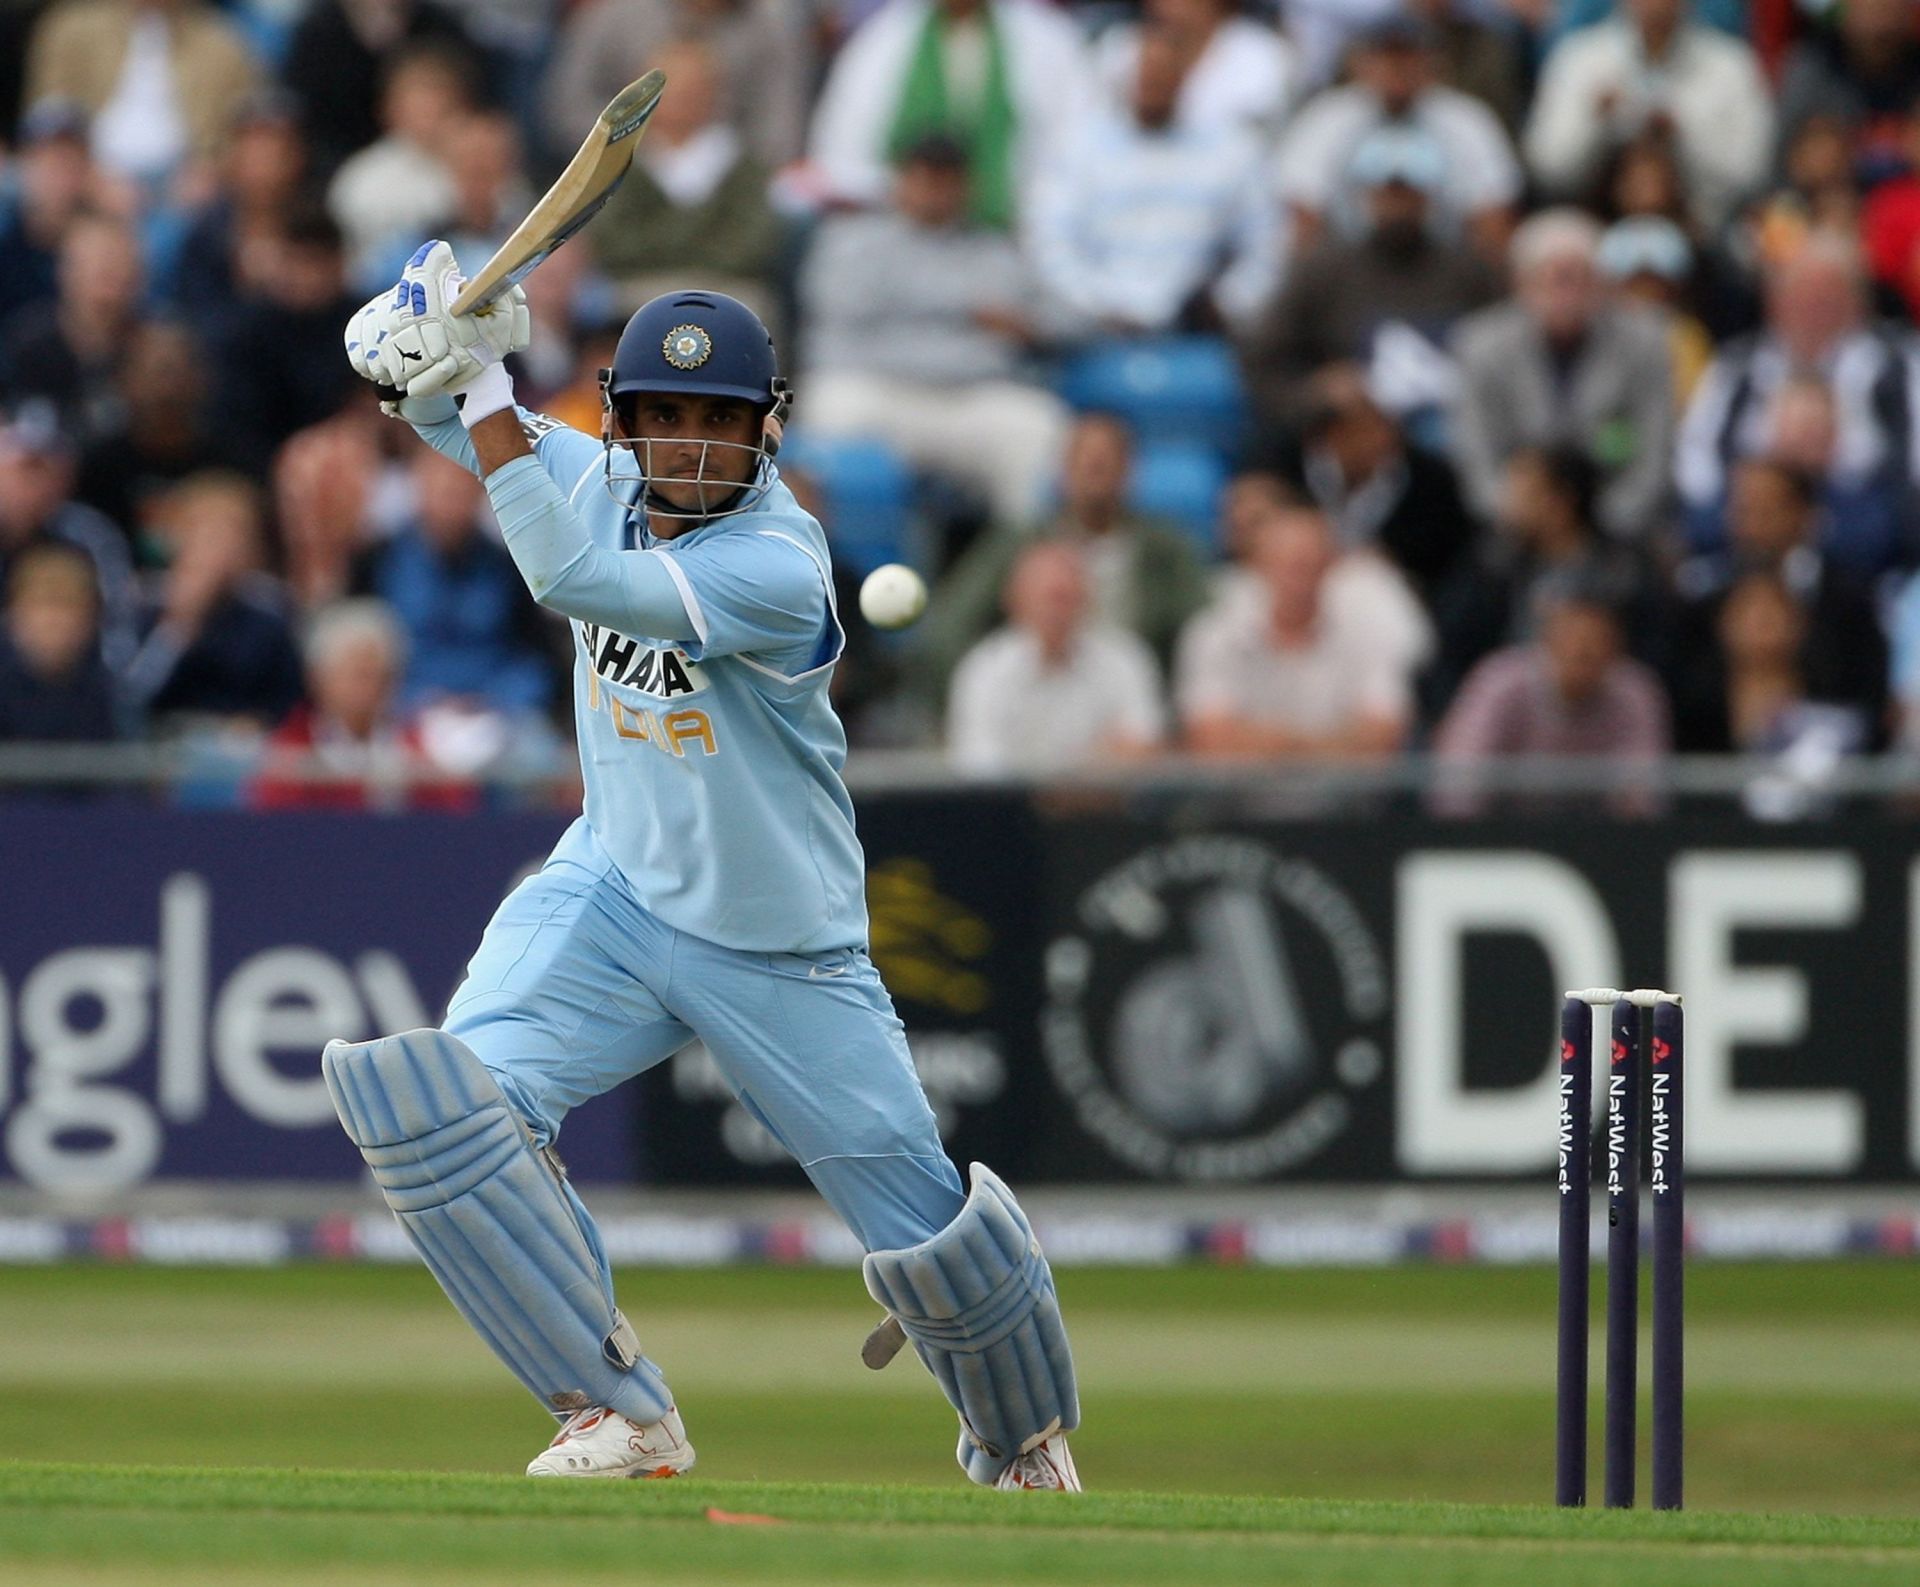 Sourav Ganguly scored over 11,000 ODI runs [Getty Images]